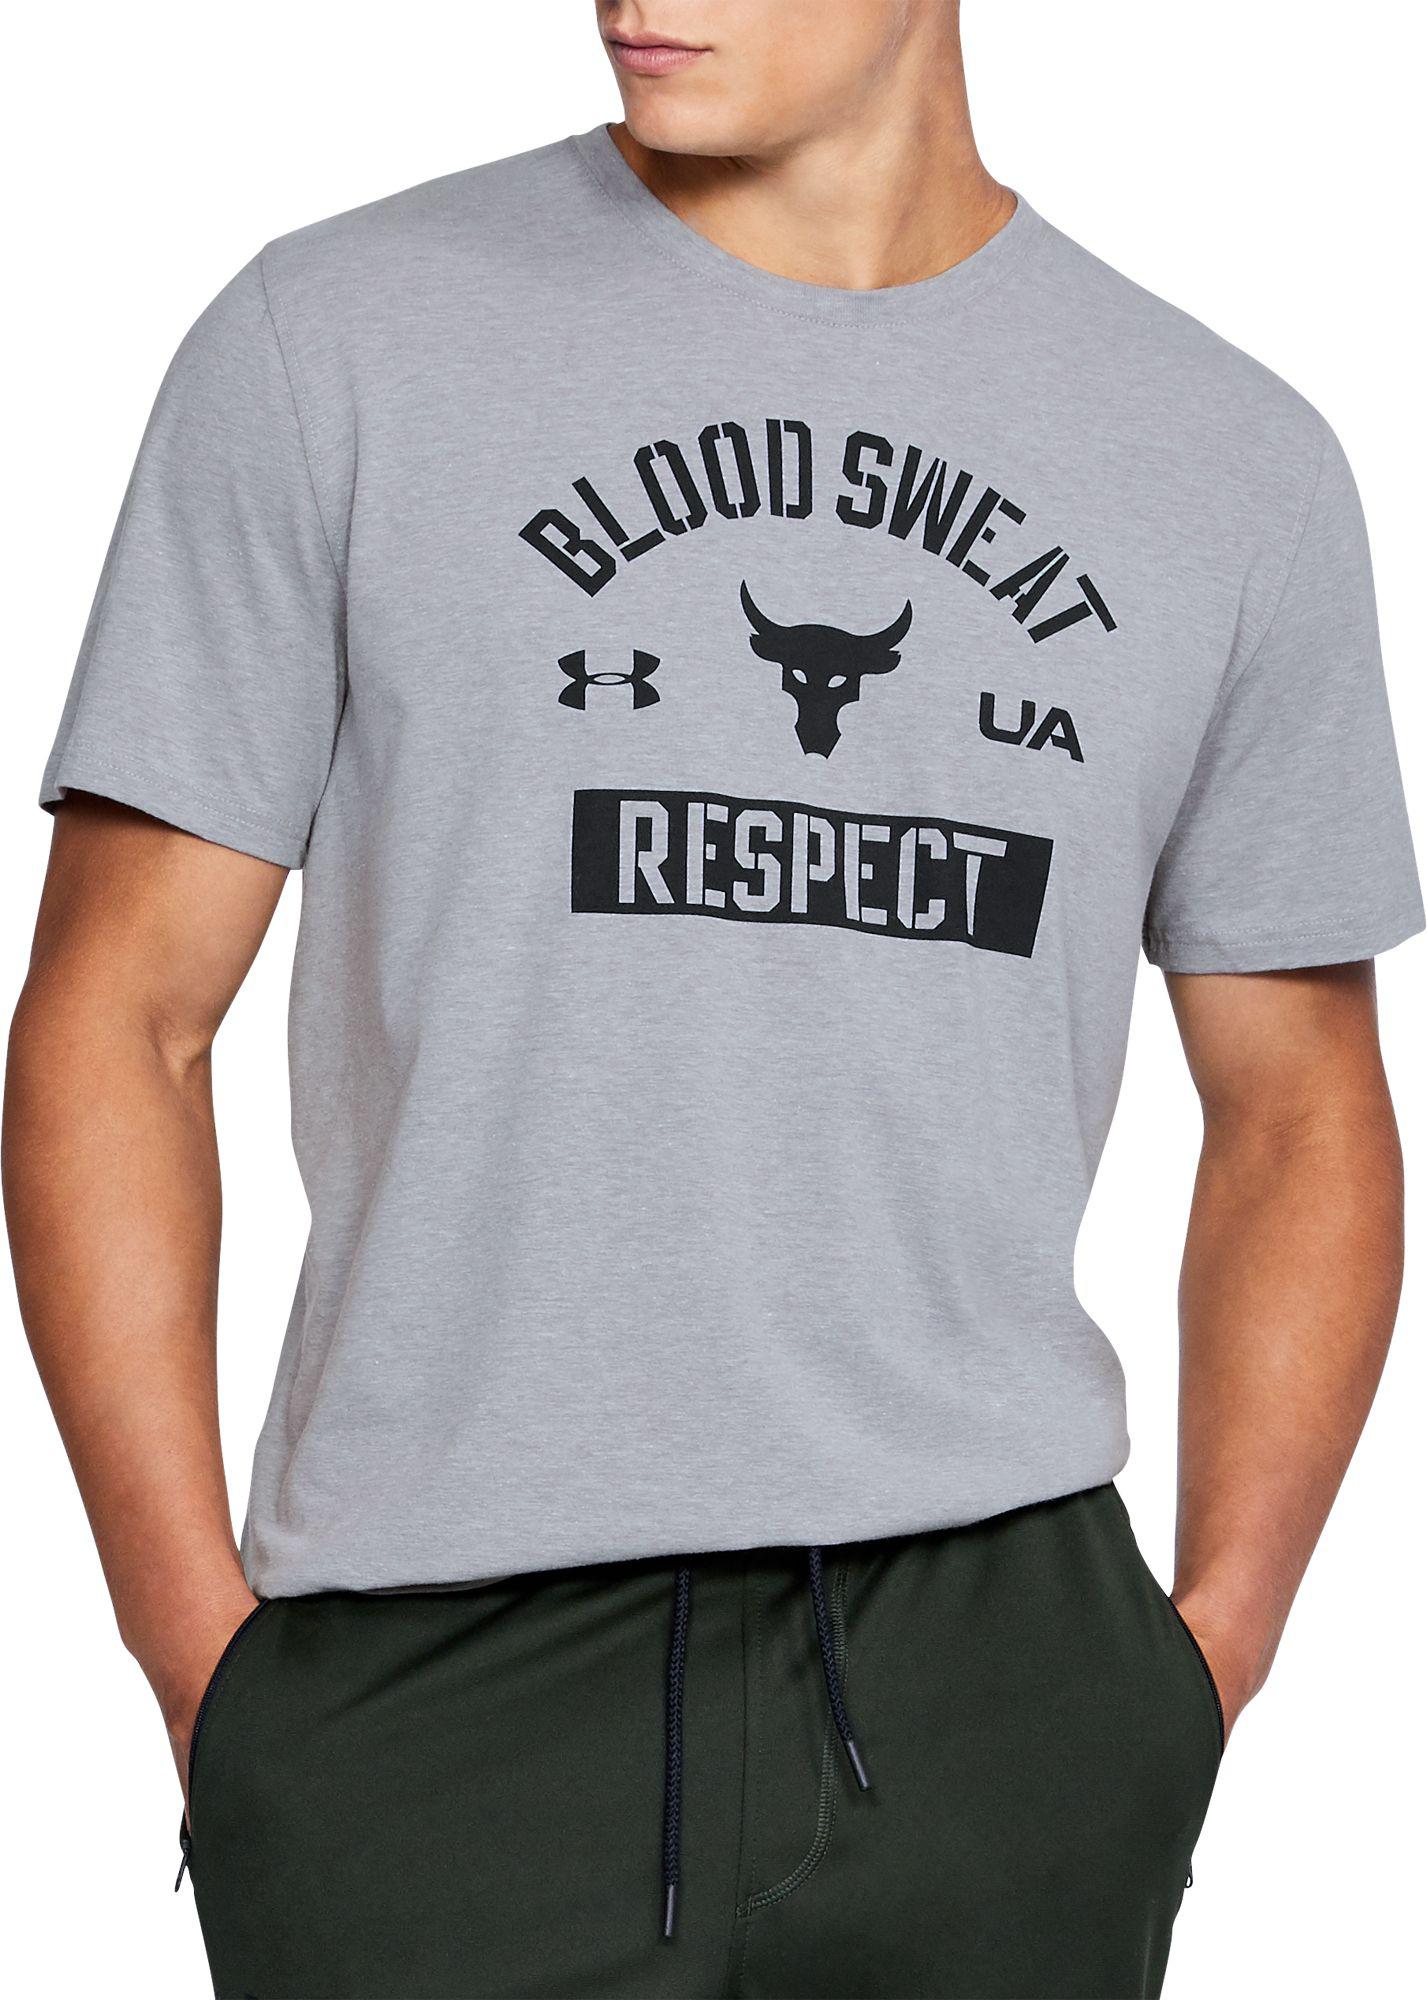 under armour blood sweat respect t shirt